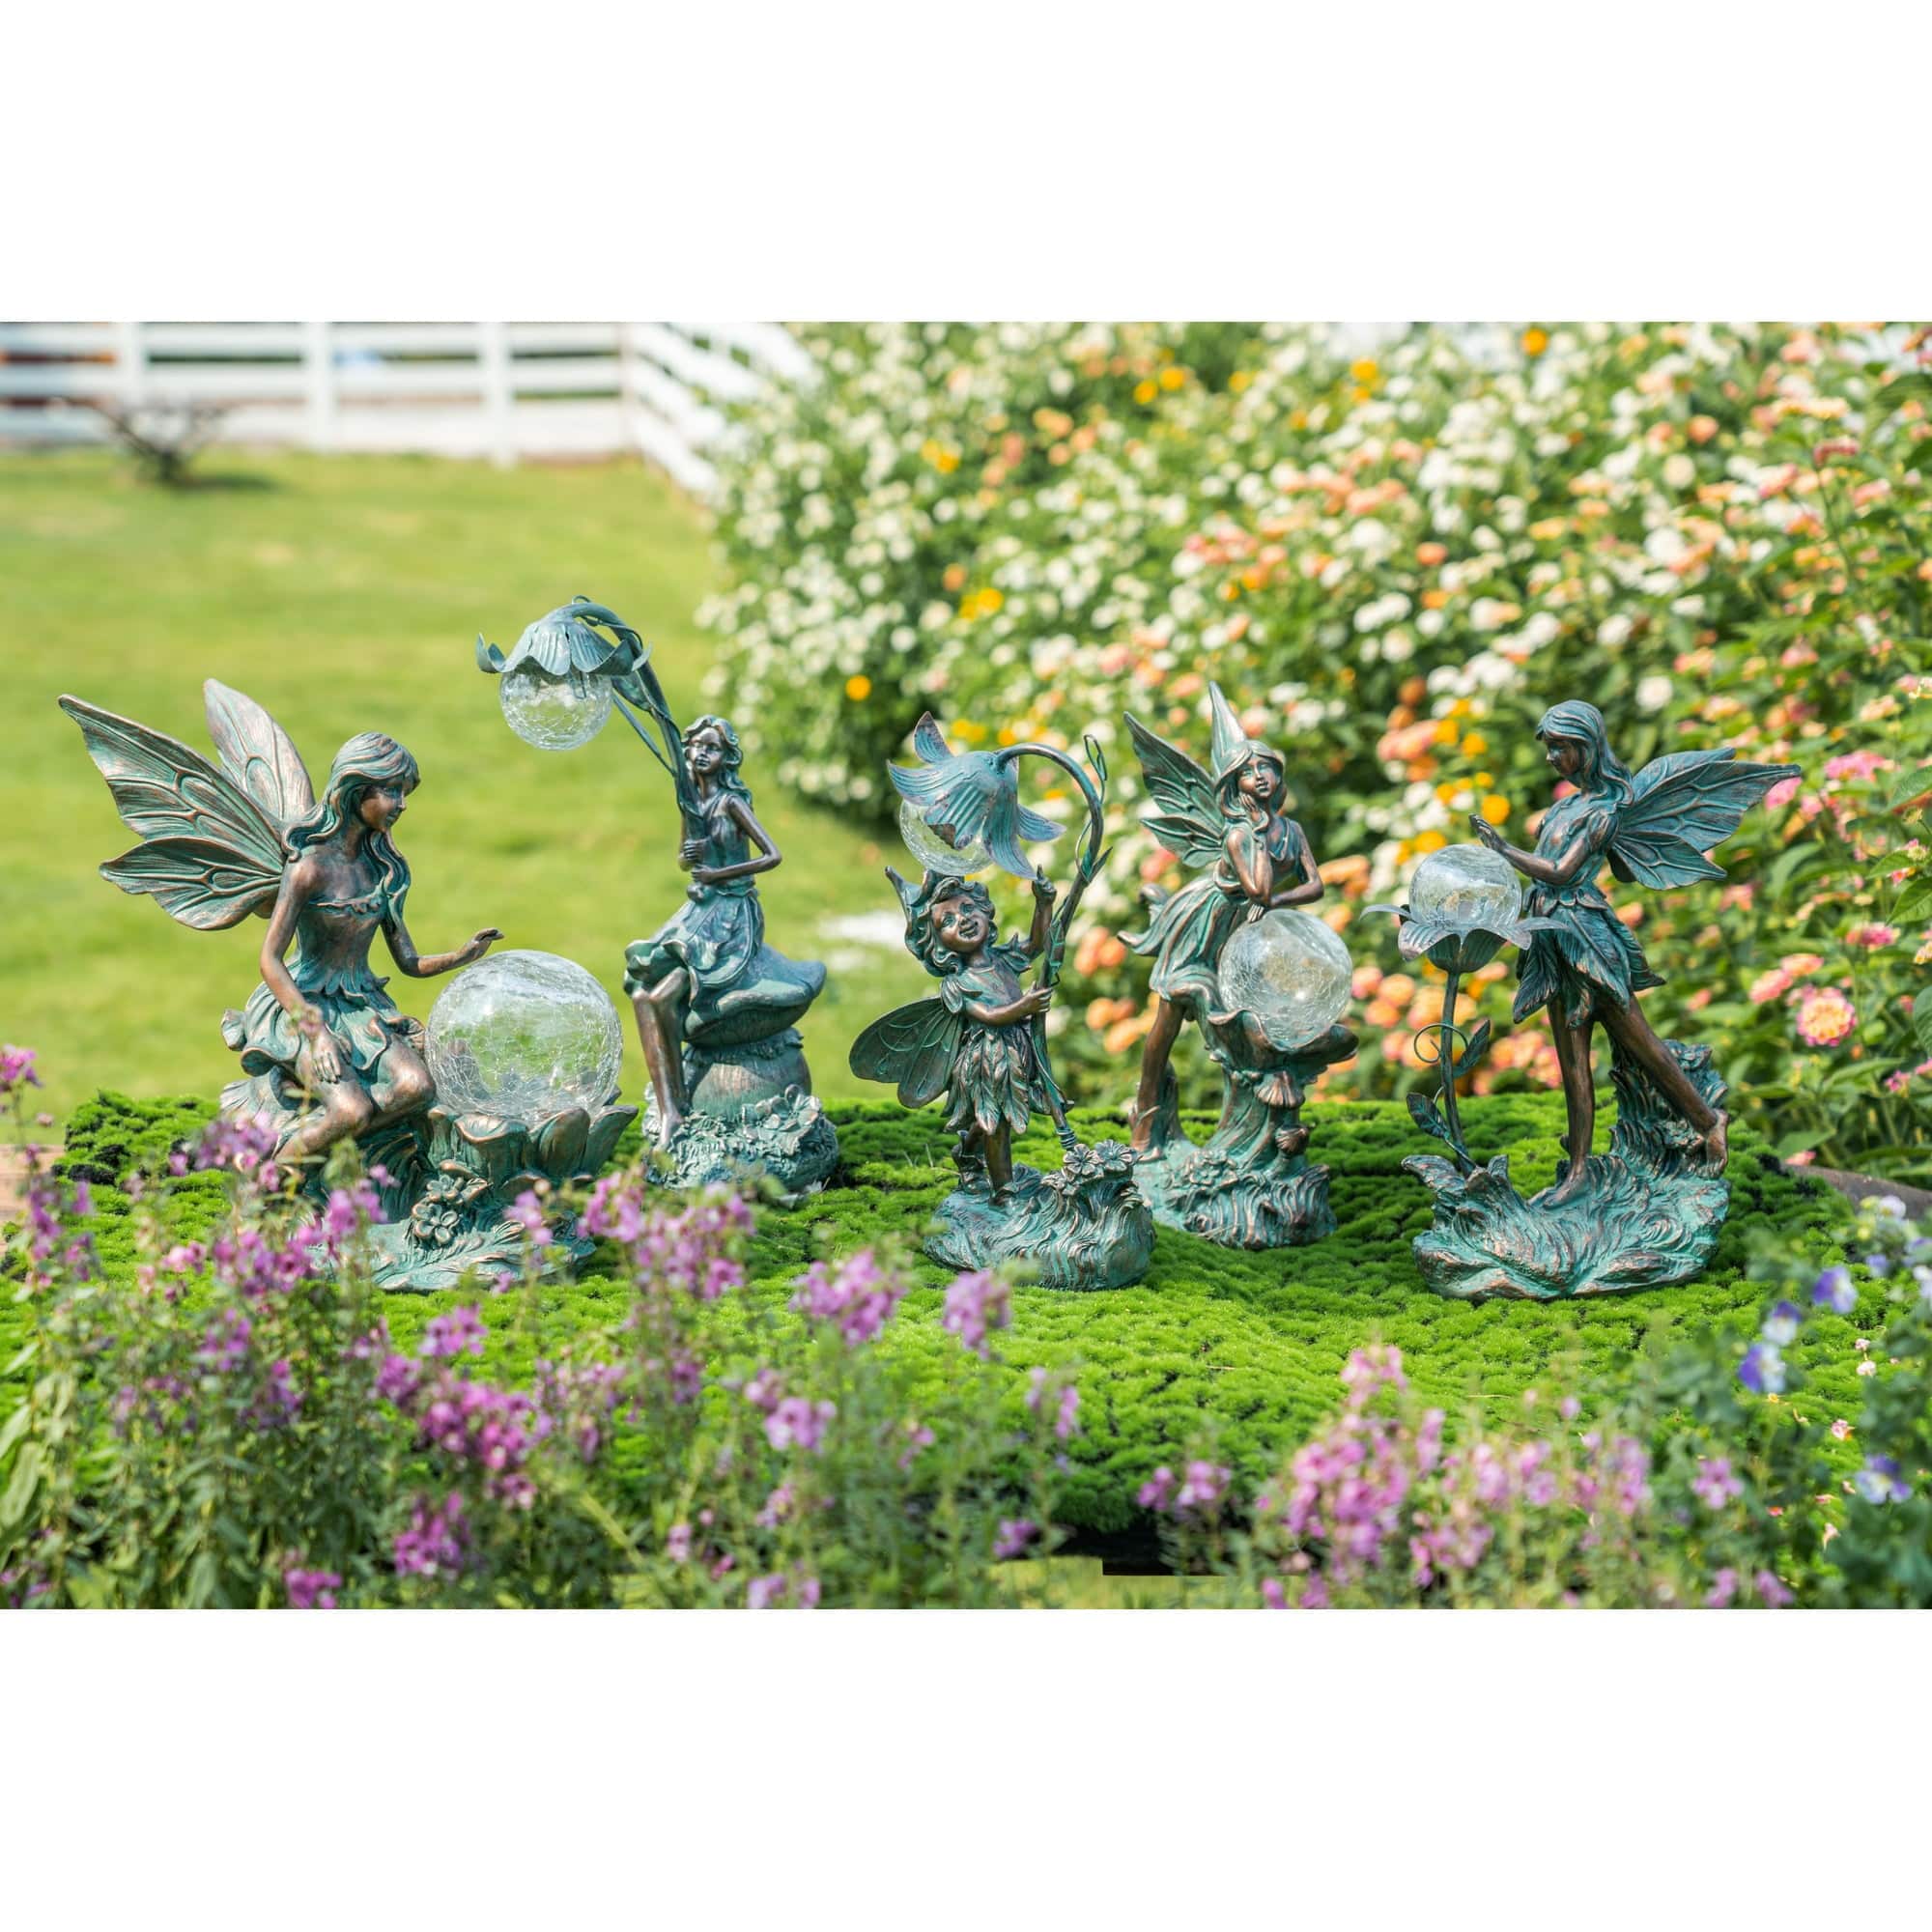 Large Fairy Tale Garden Statue - On Sale - Bed Bath & Beyond - 37522338